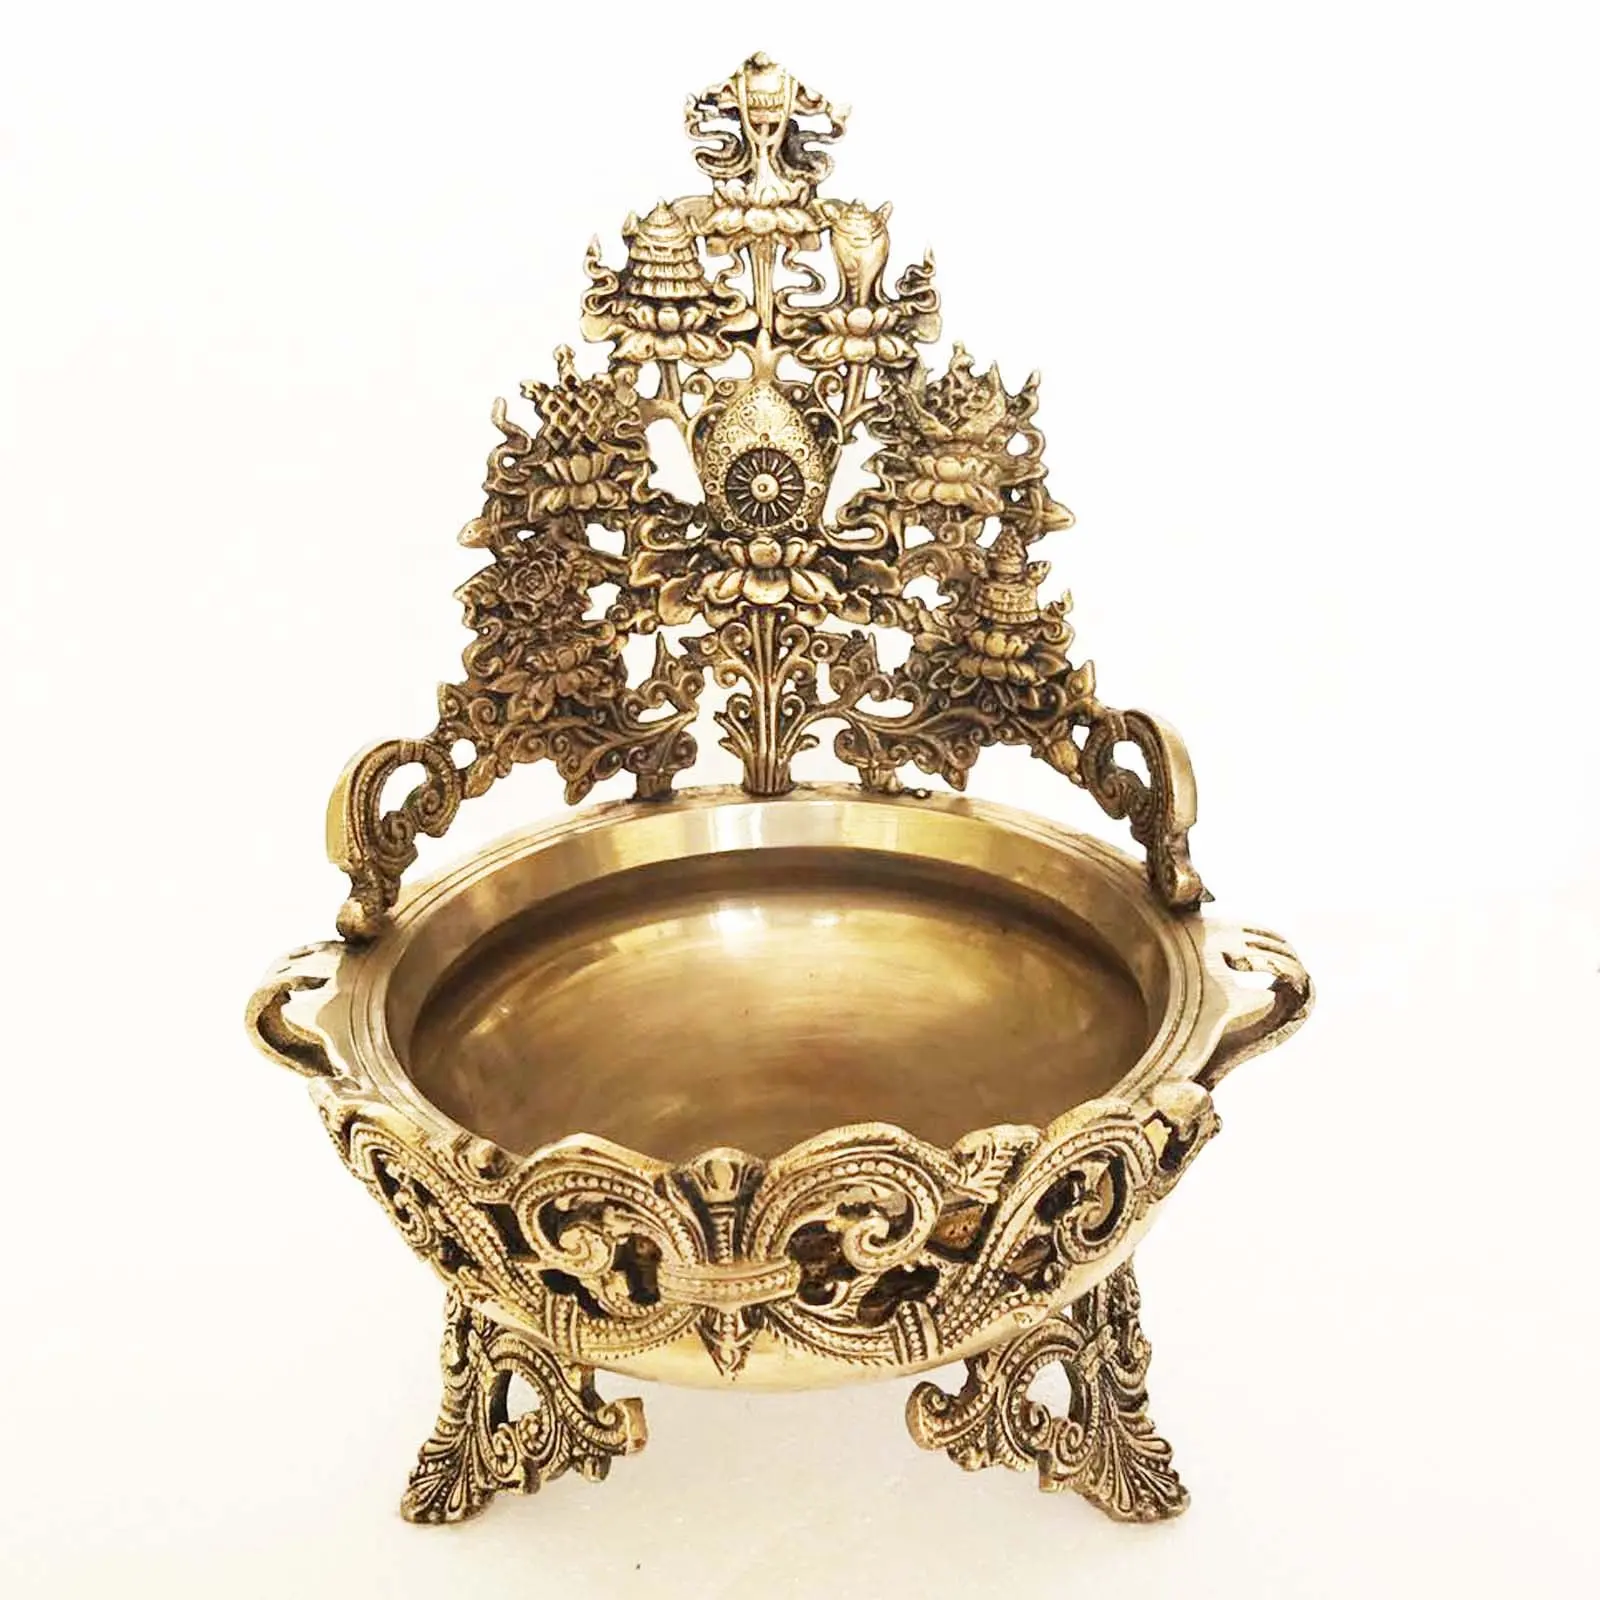 Diwali Decor Brass Metal Urli Home/Event Decor Hand Carved Urli/Pot in antique finished